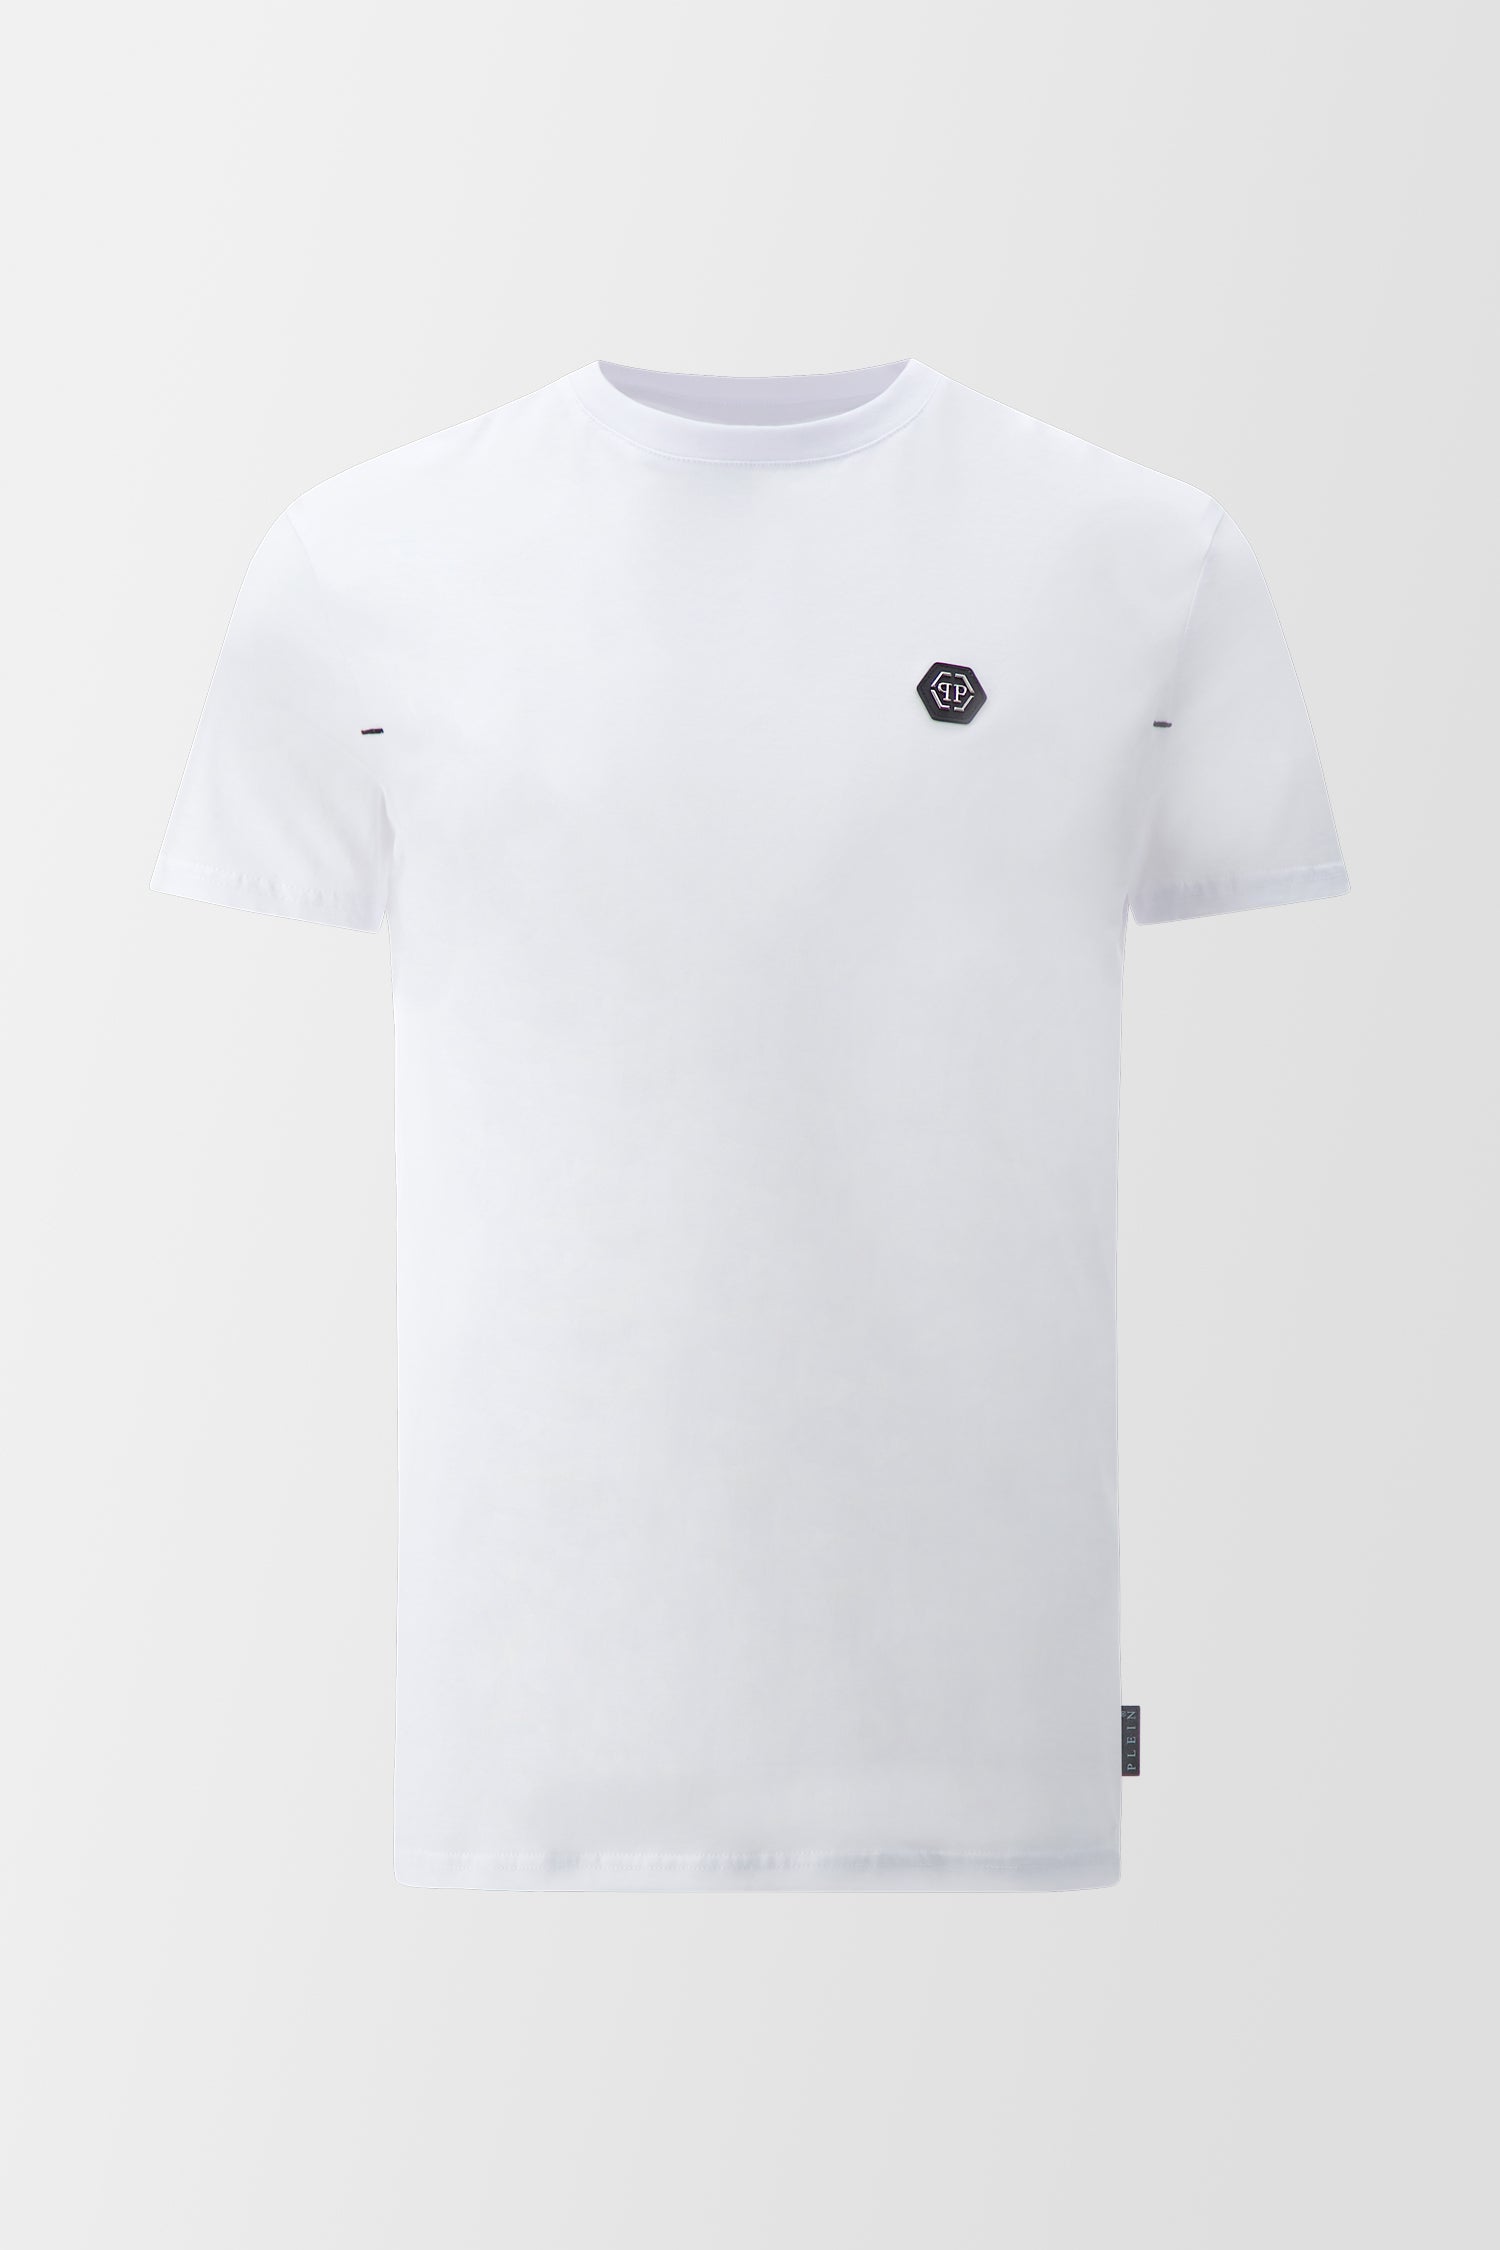 Philipp Plein White Round Neck SS Istitutional T-Shirt